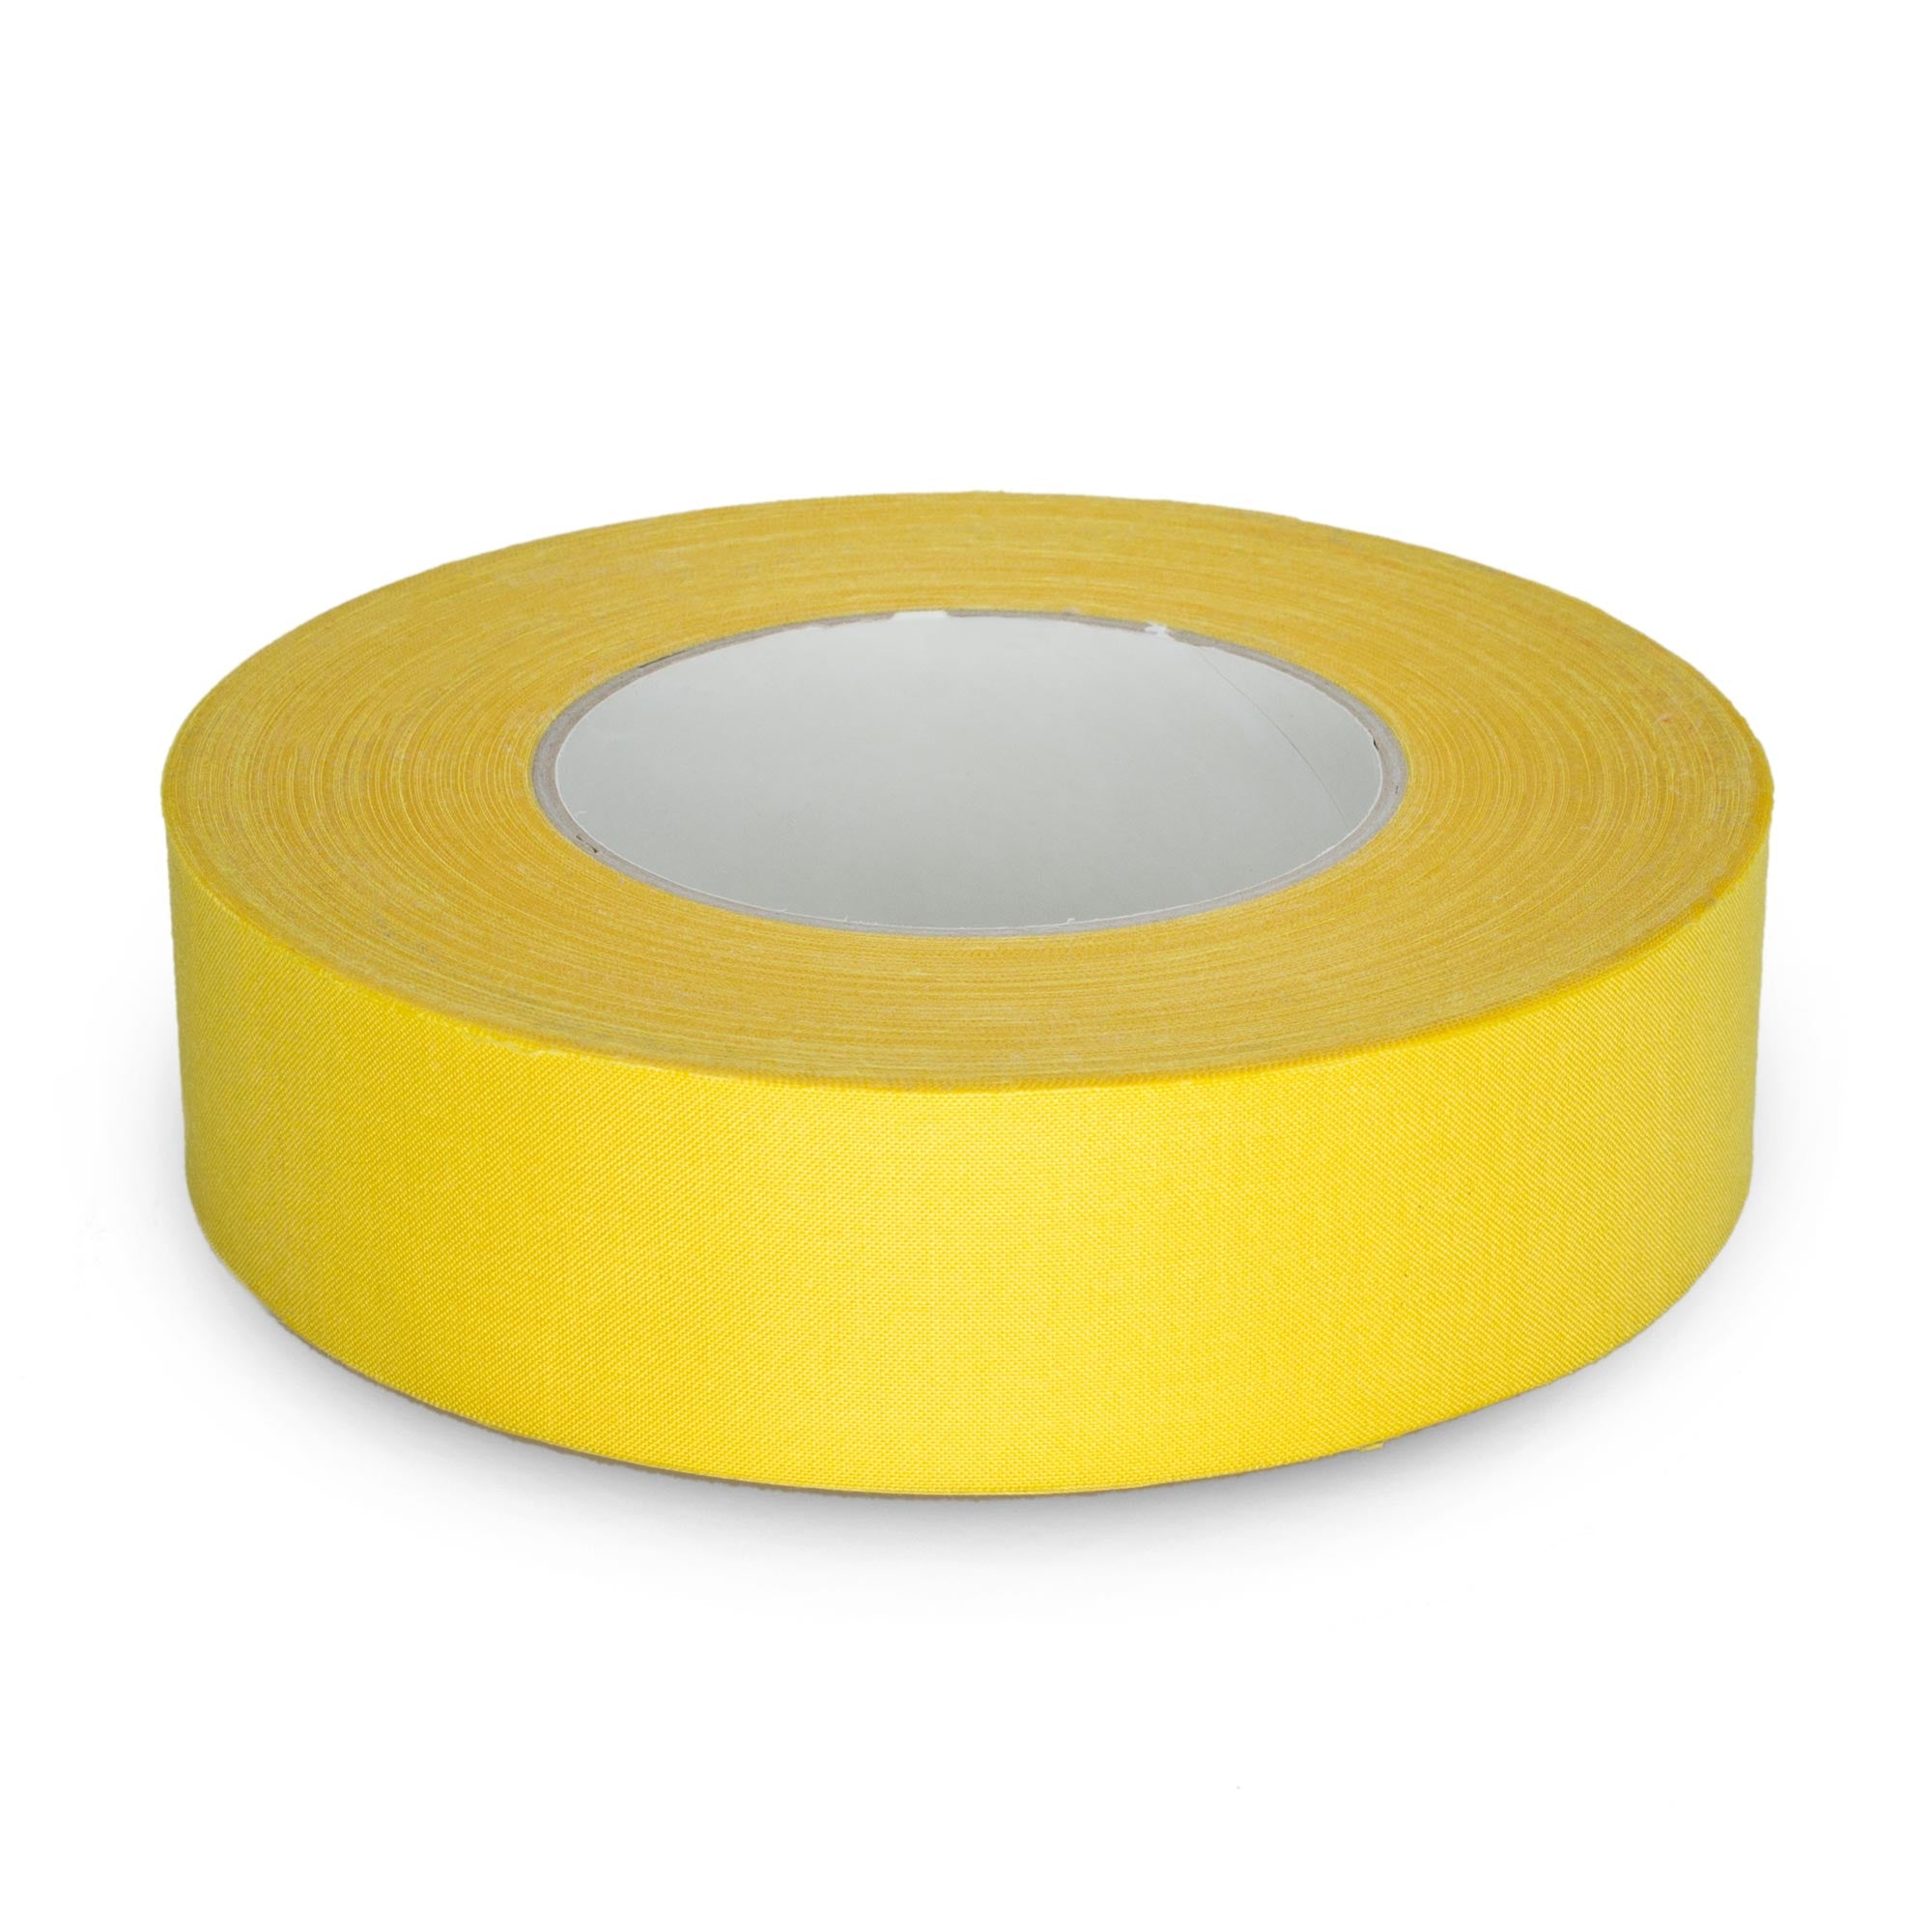 unoackaged yellow 3.8cm wide tape